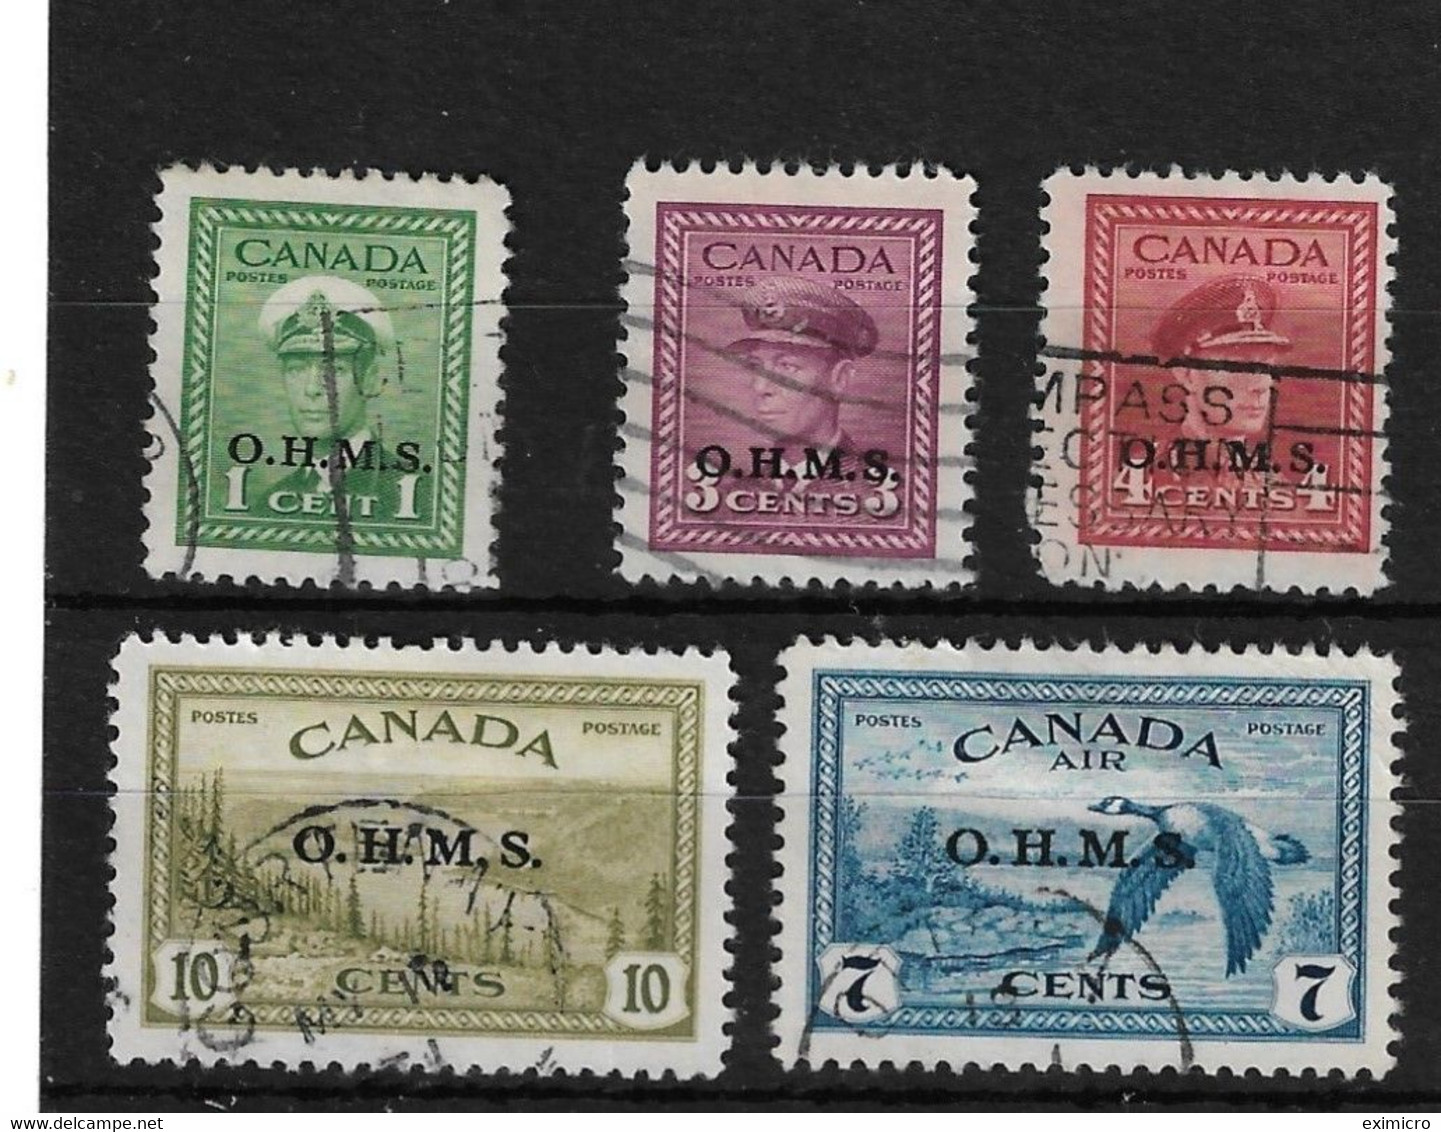 CANADA 1949 O.H.M.S. OFFICIALS SG O162, O164 - O166, O171 FINE USED Cat £40+ - Overprinted